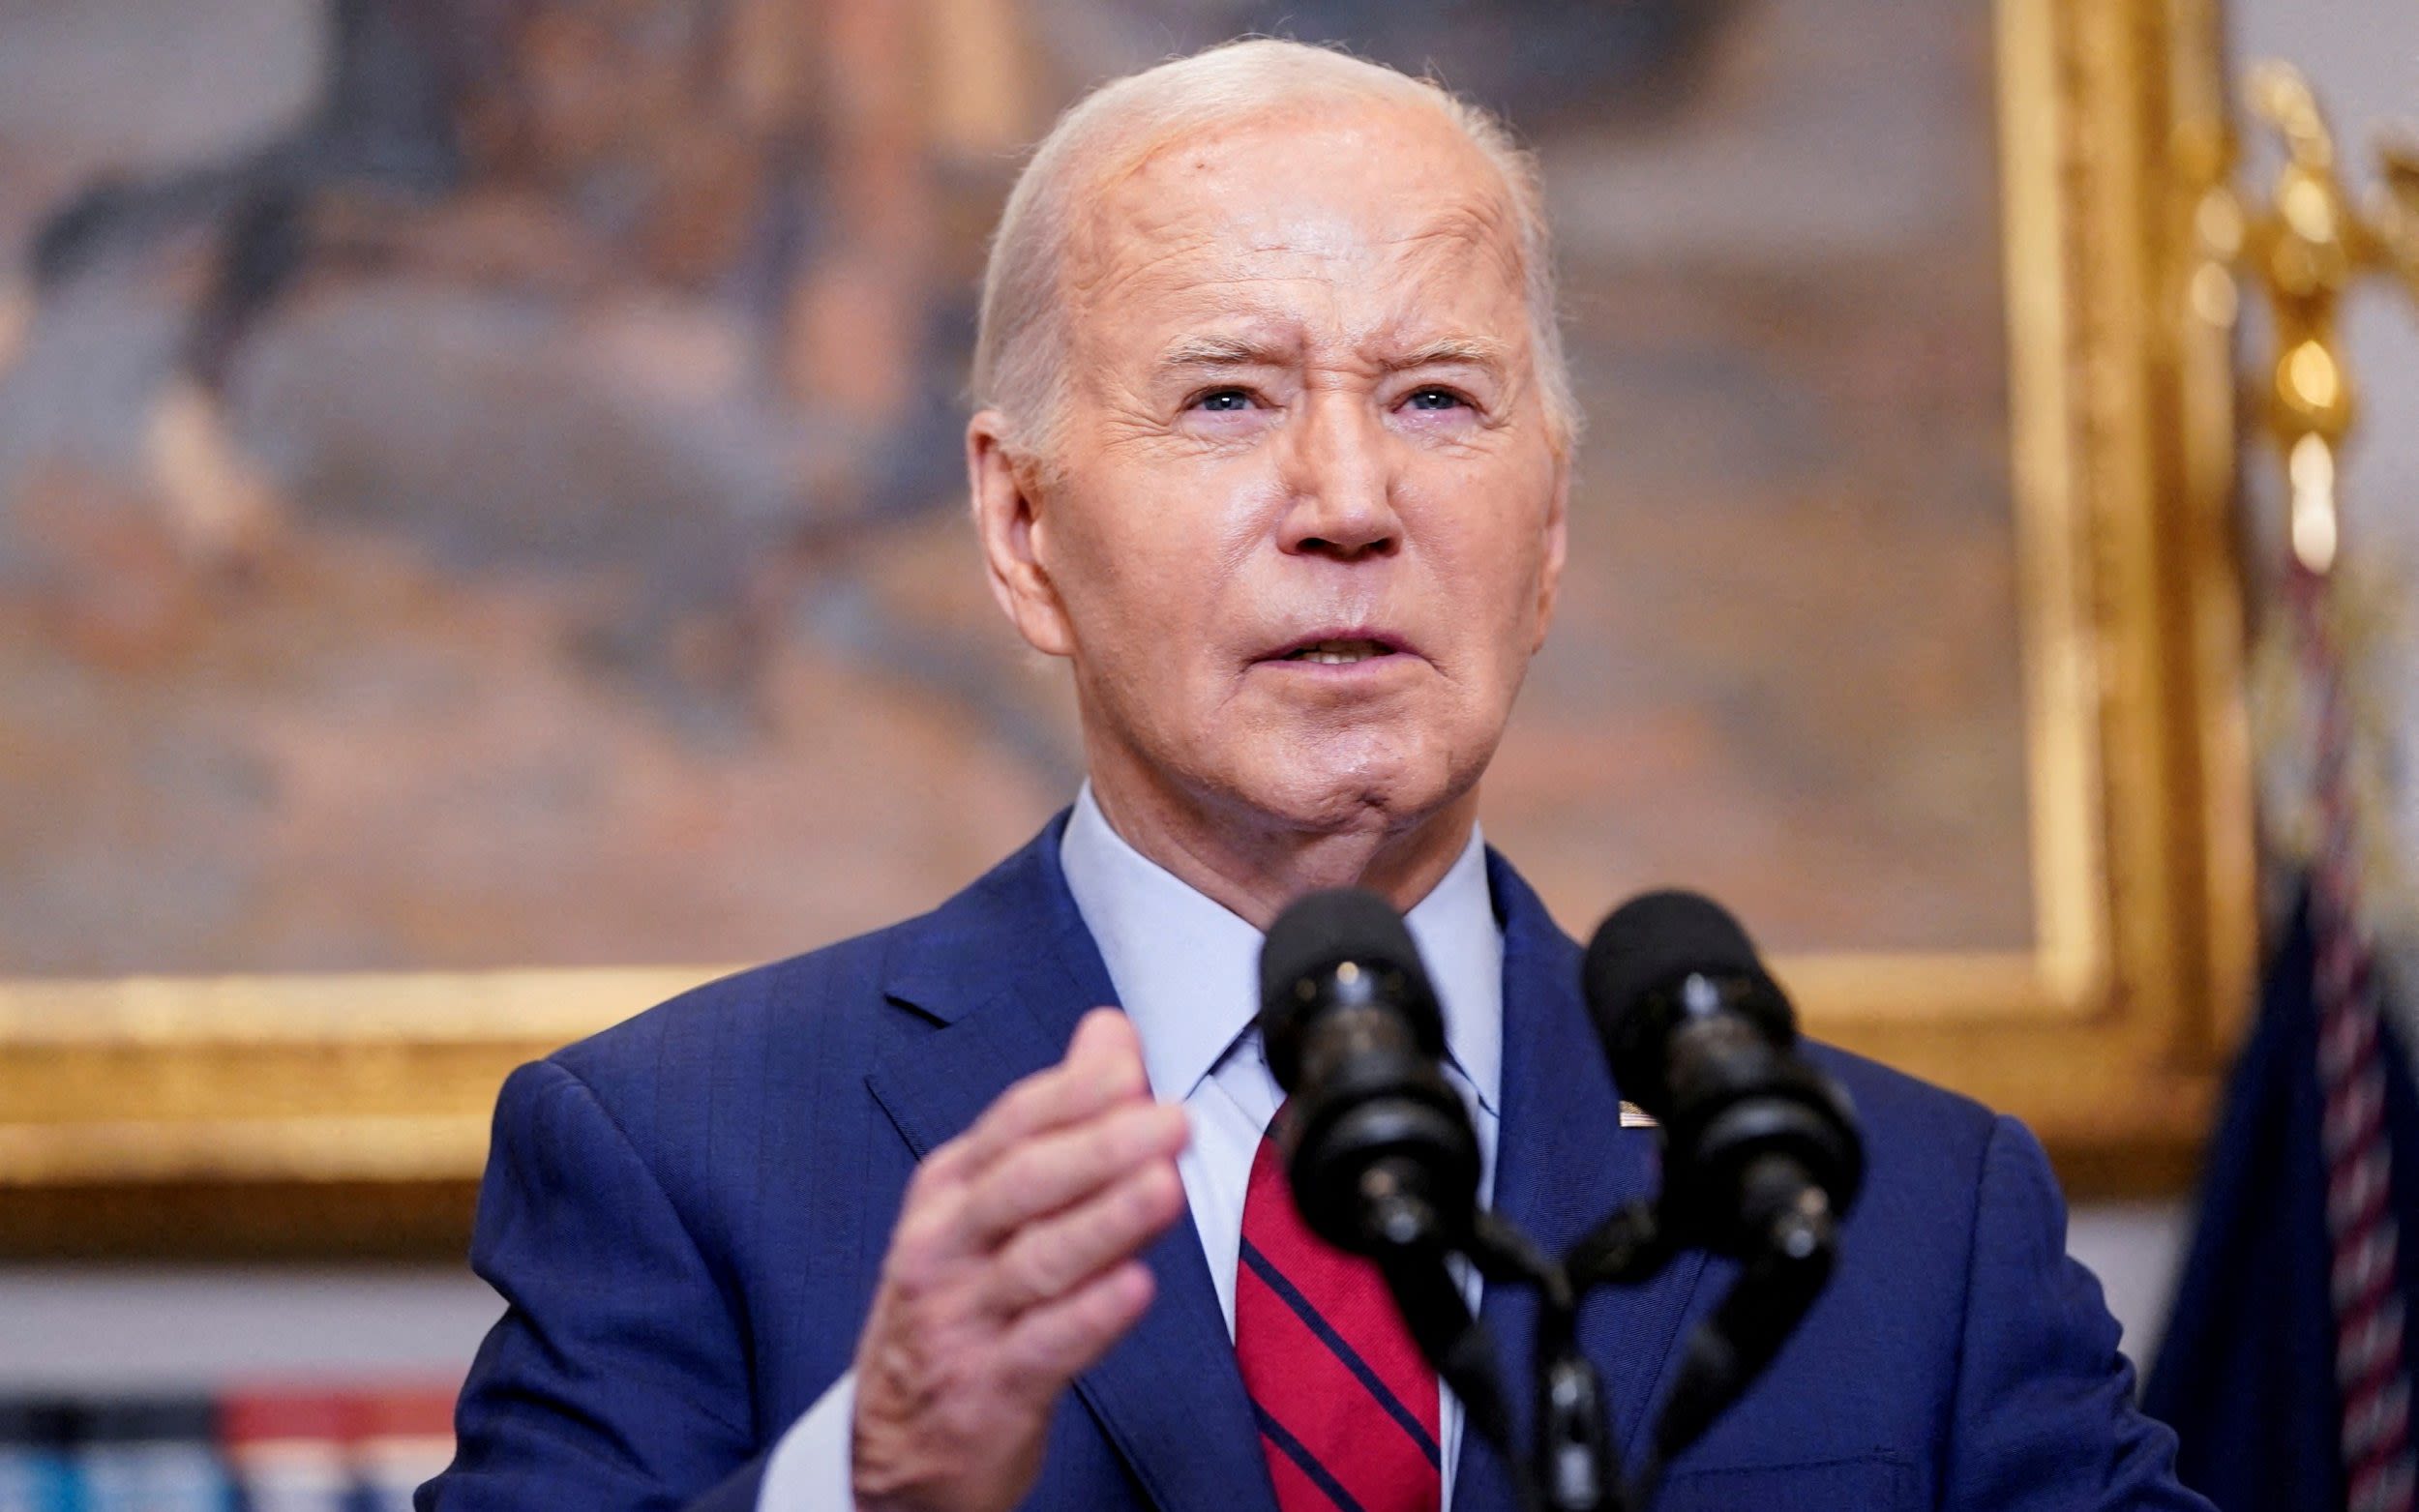 Biden blocks release of interview tapes showing his ‘poor memory’